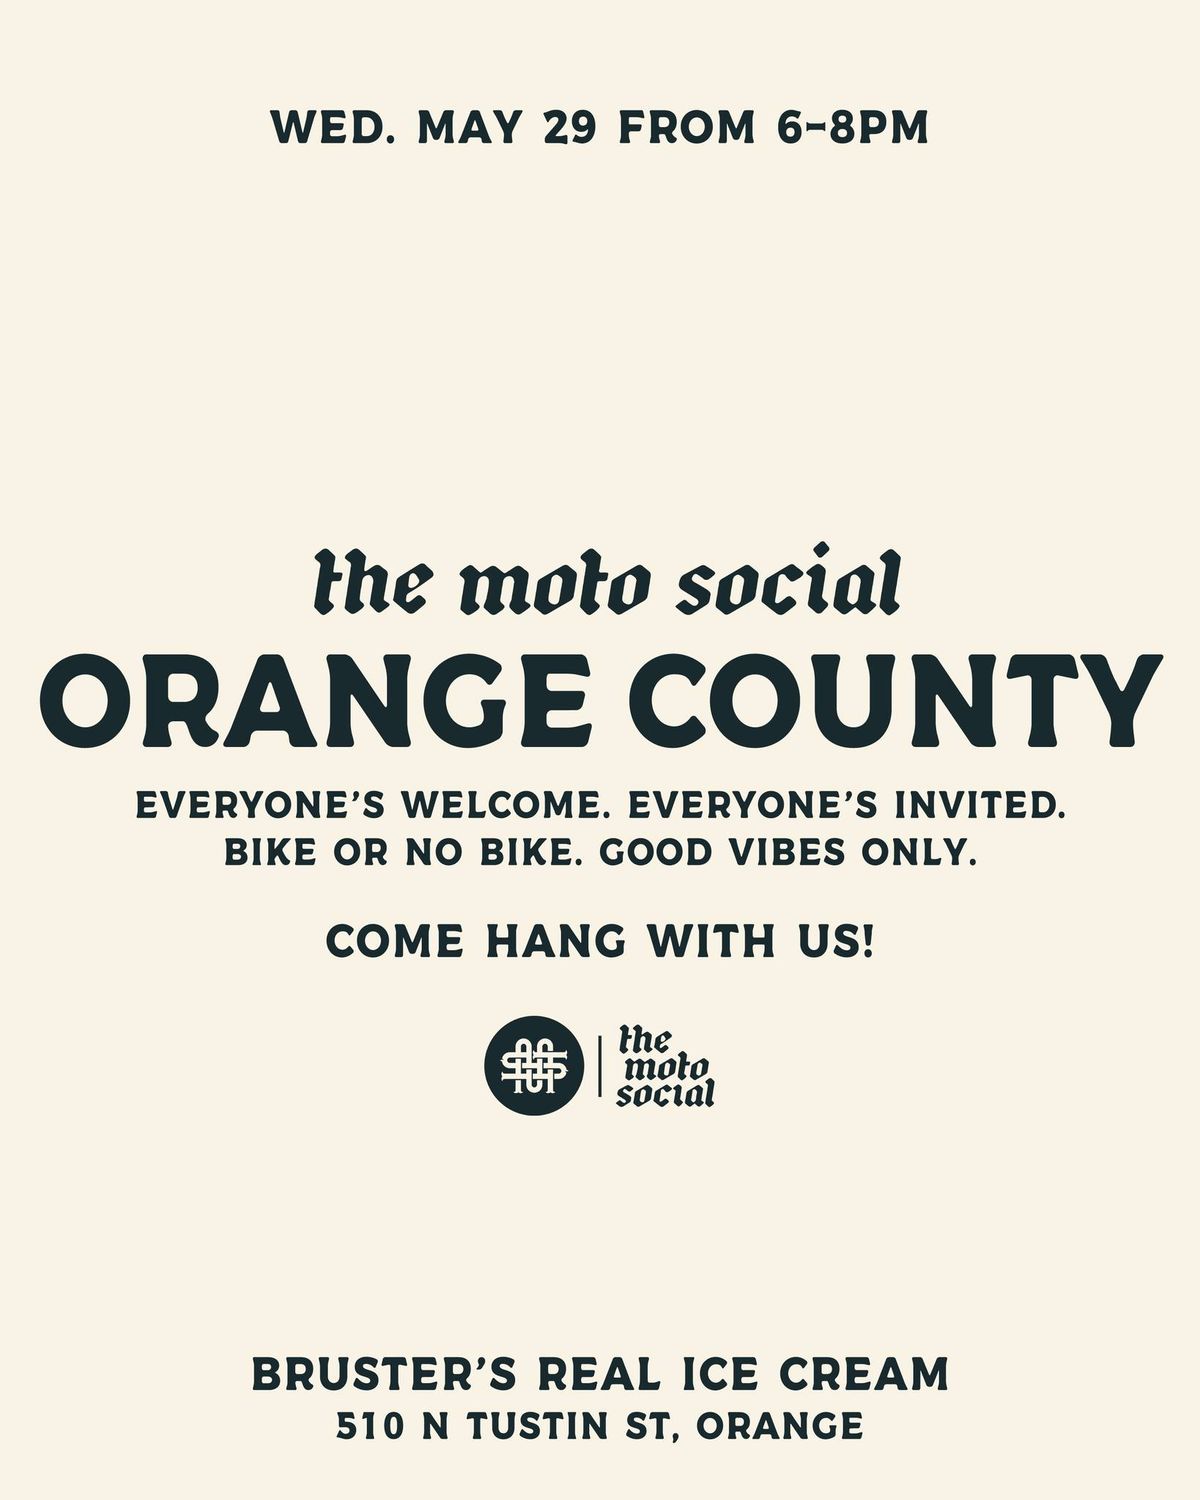 The MotoSocial Orange County